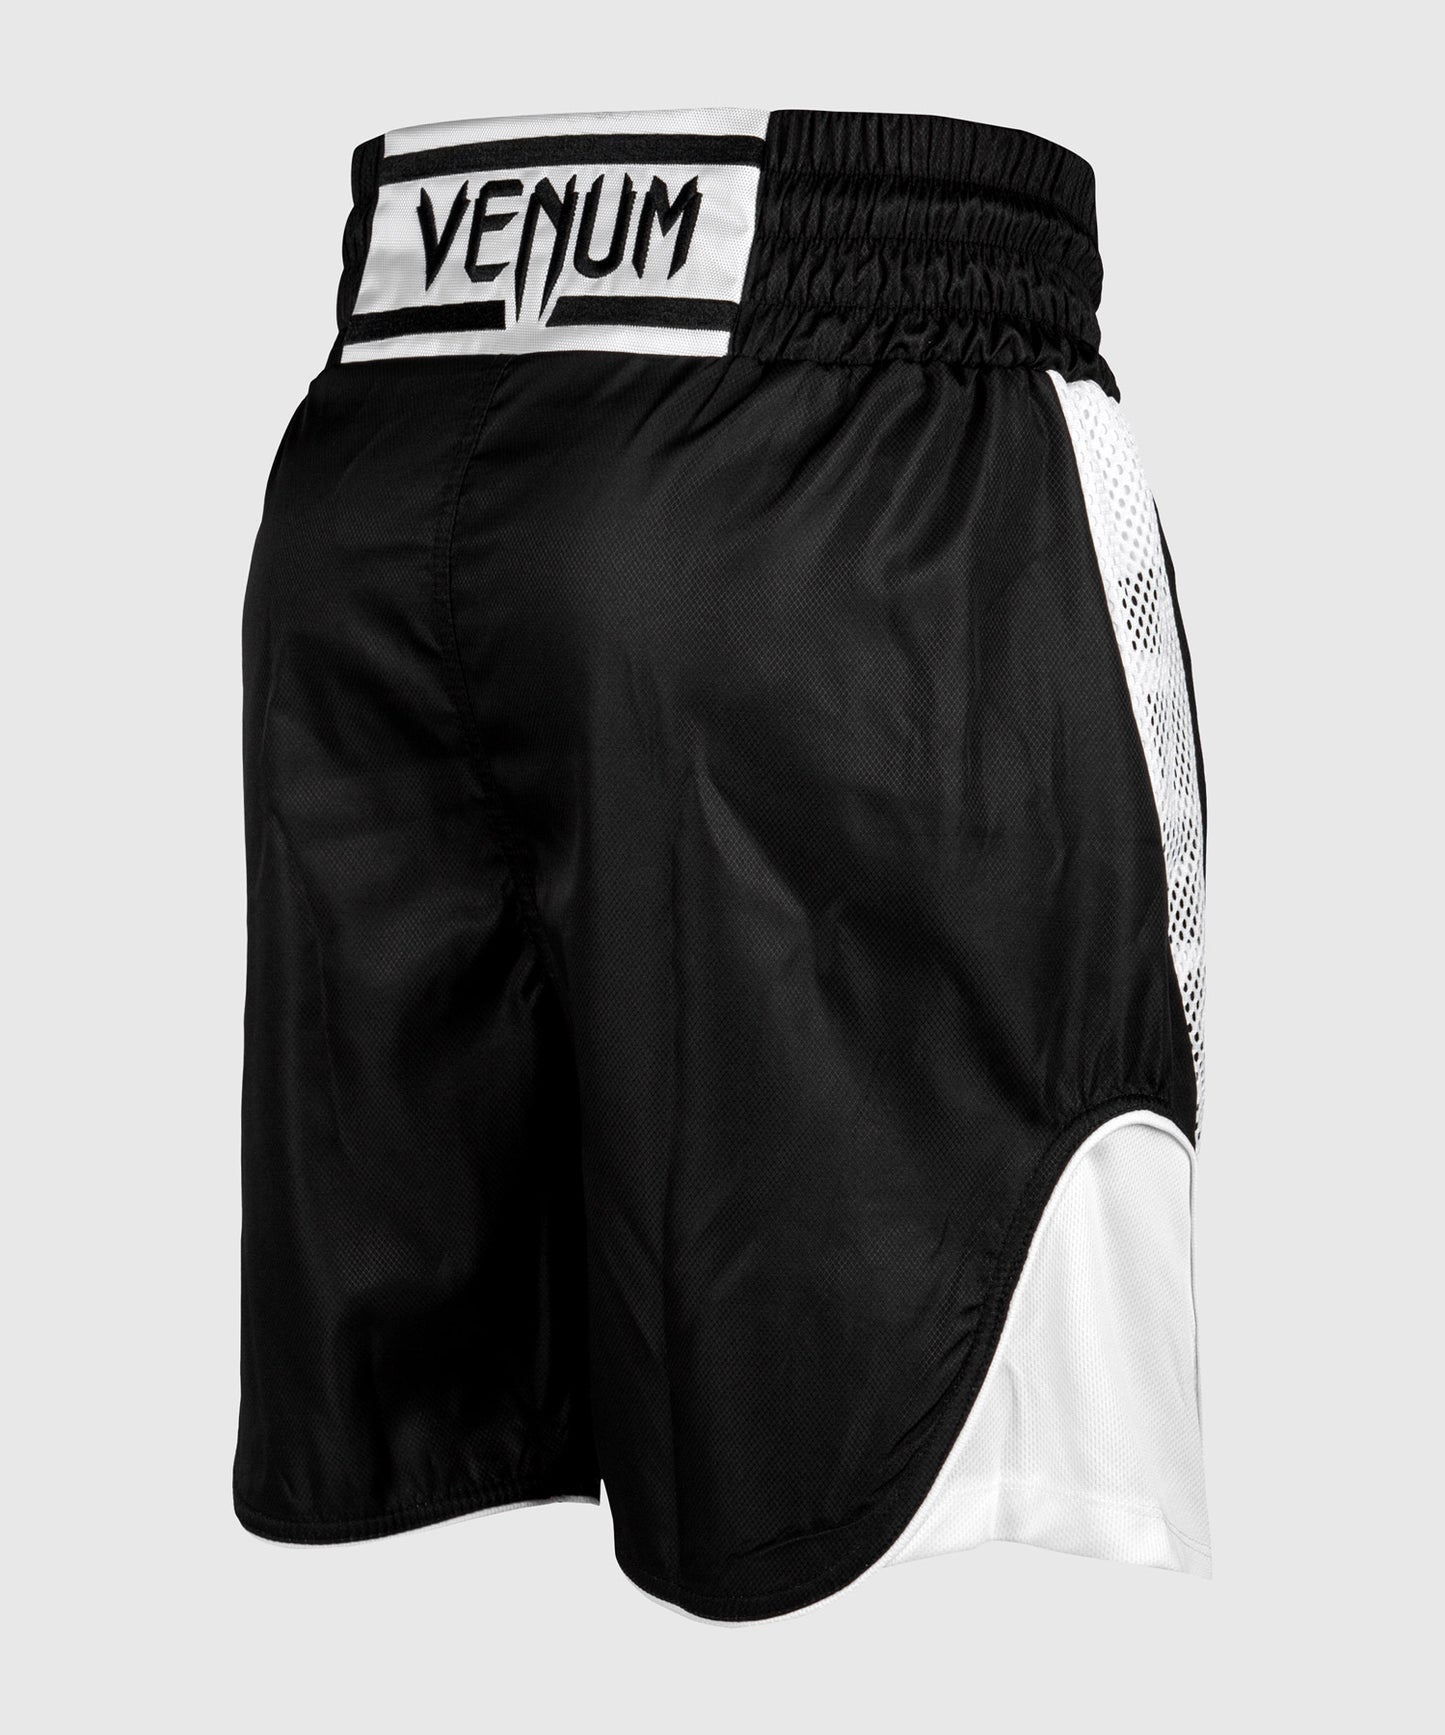 Pantalones de Boxeo Venum Elite - Negro/Blanco